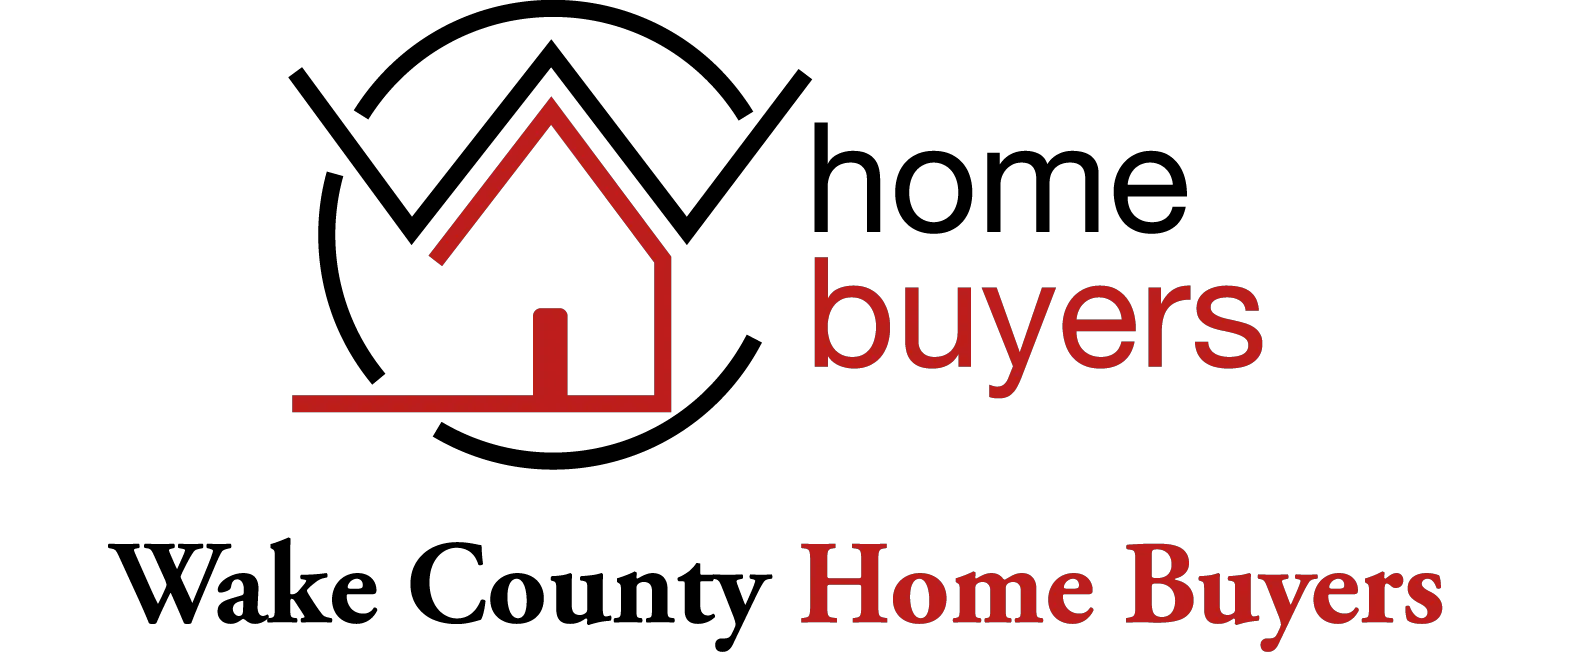 Wake County Home Buyers Logo